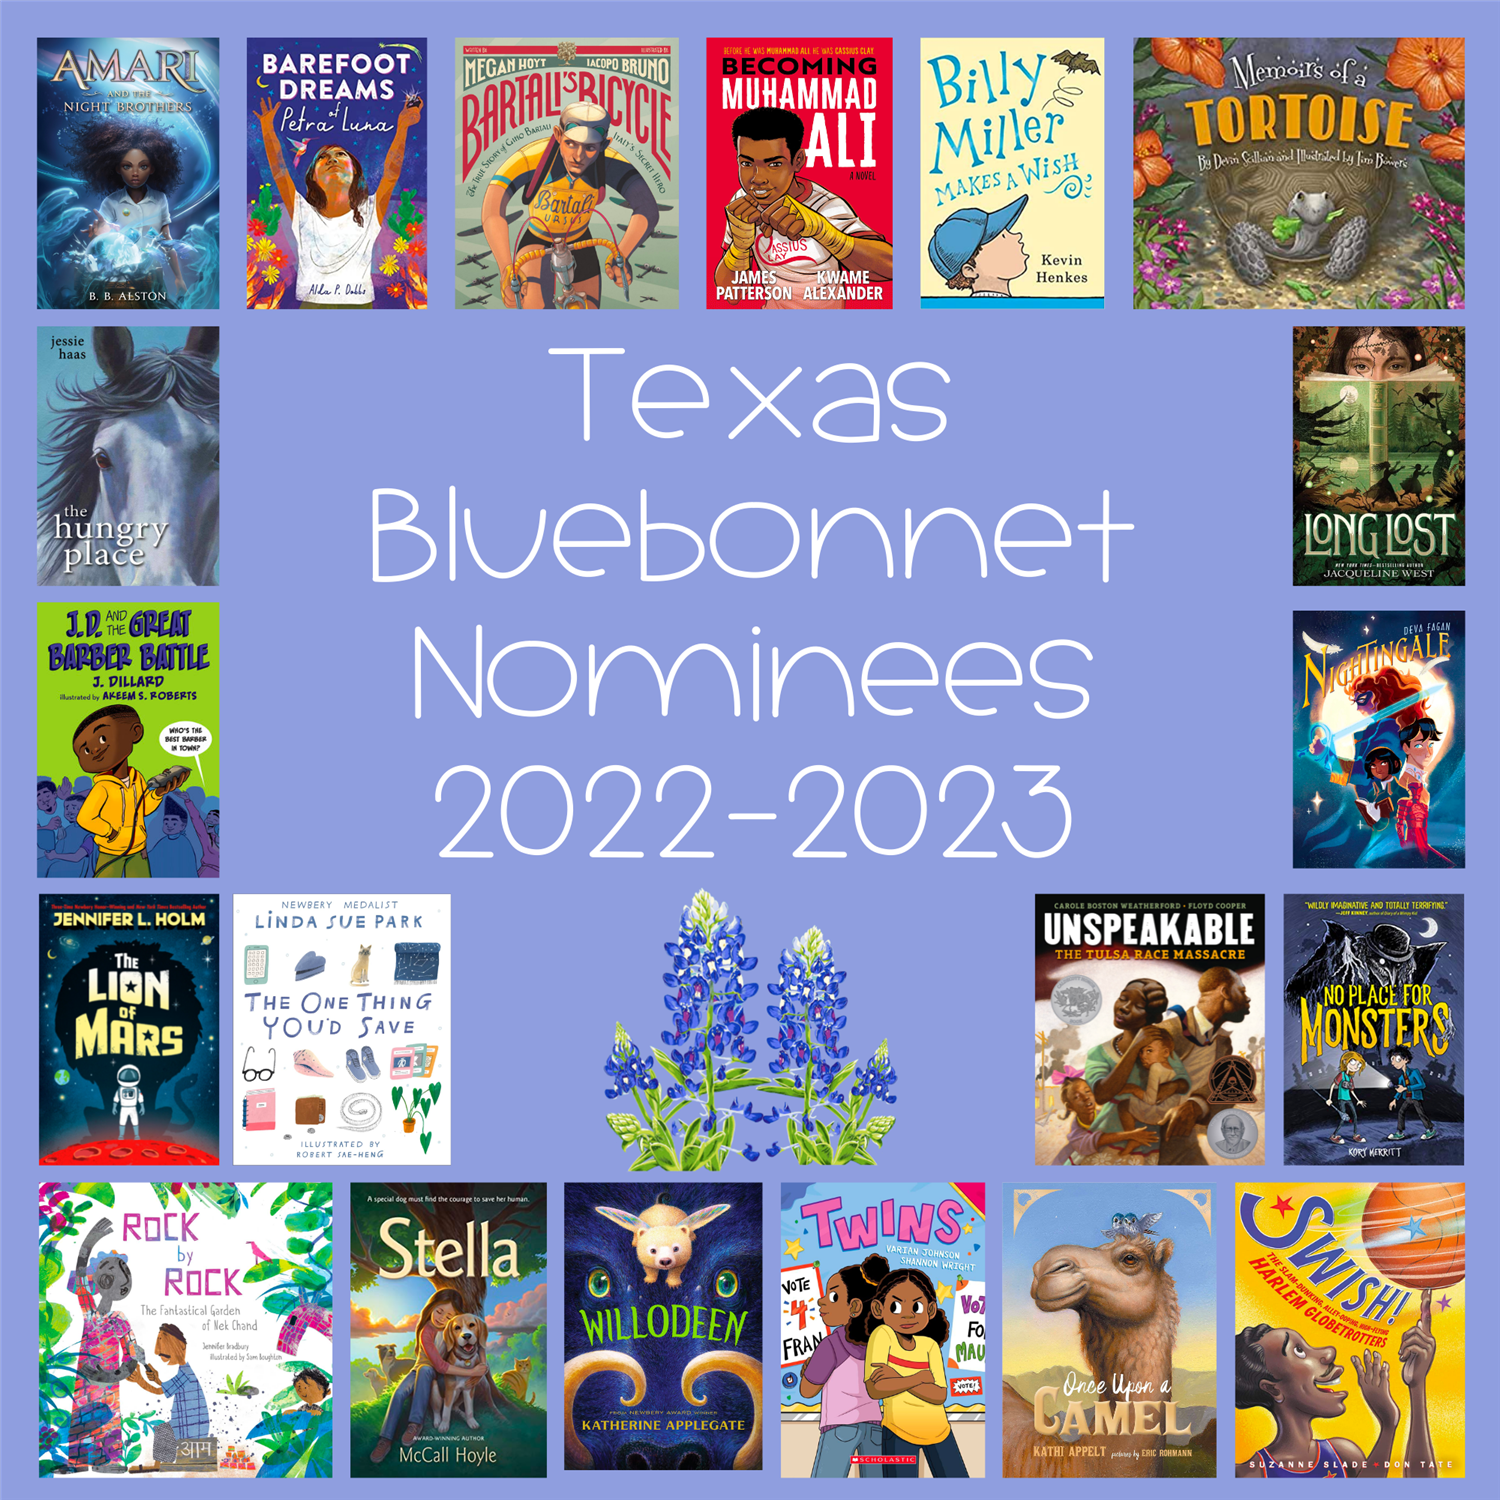 Texas Bluebonnet Nominees 2022-2023 covers